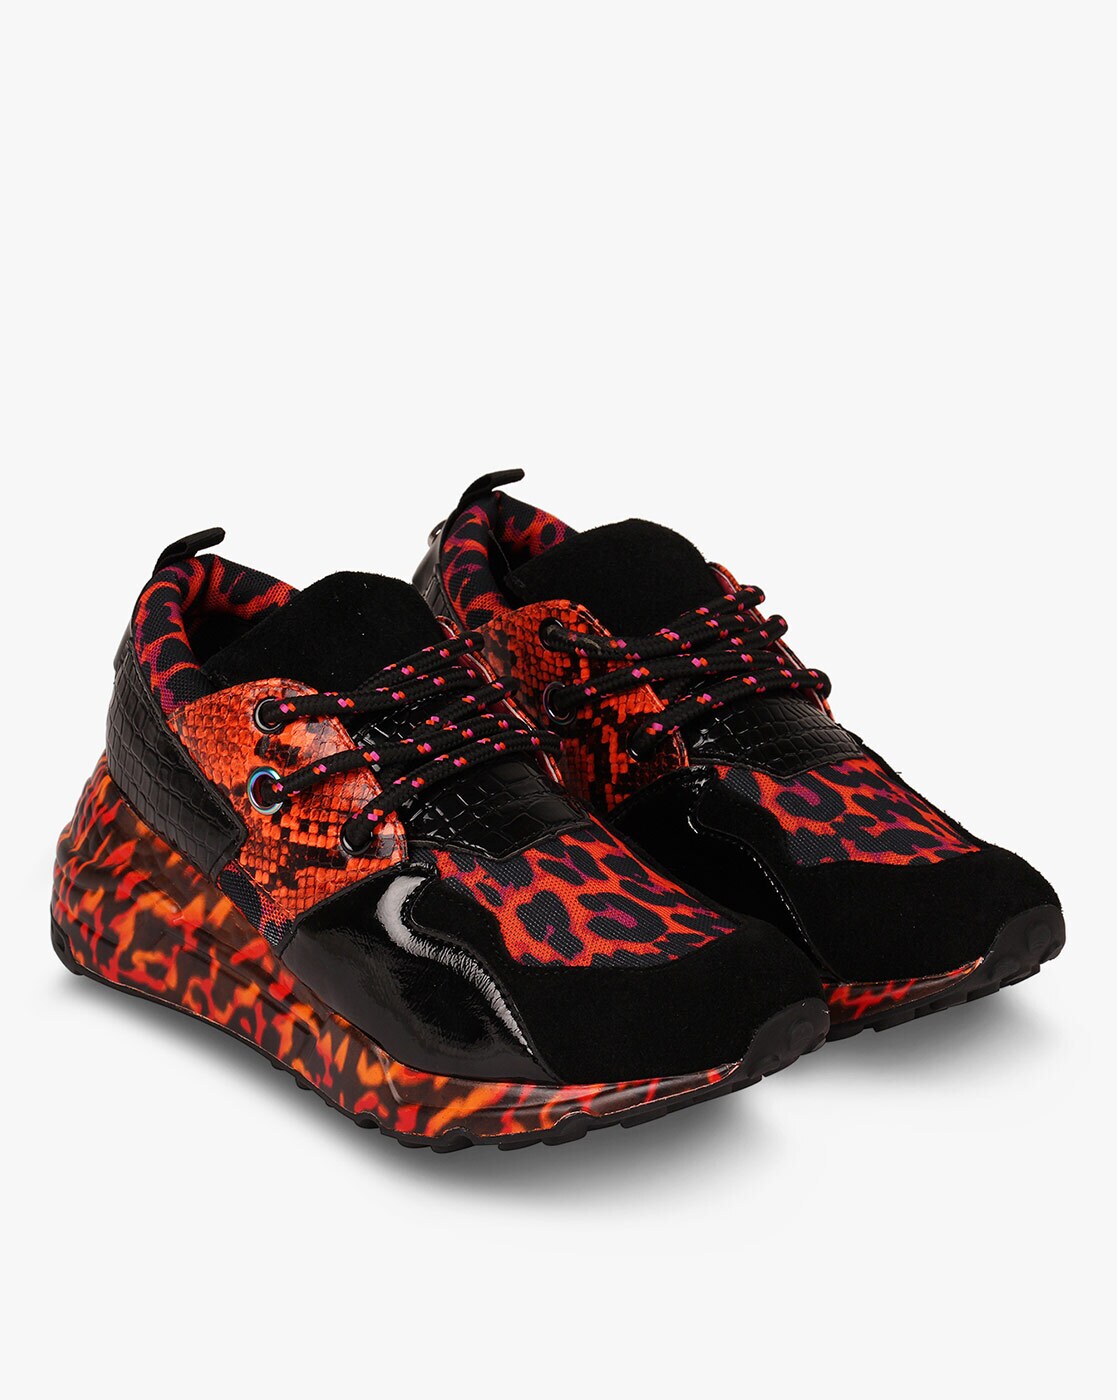 steve madden cheetah print shoes